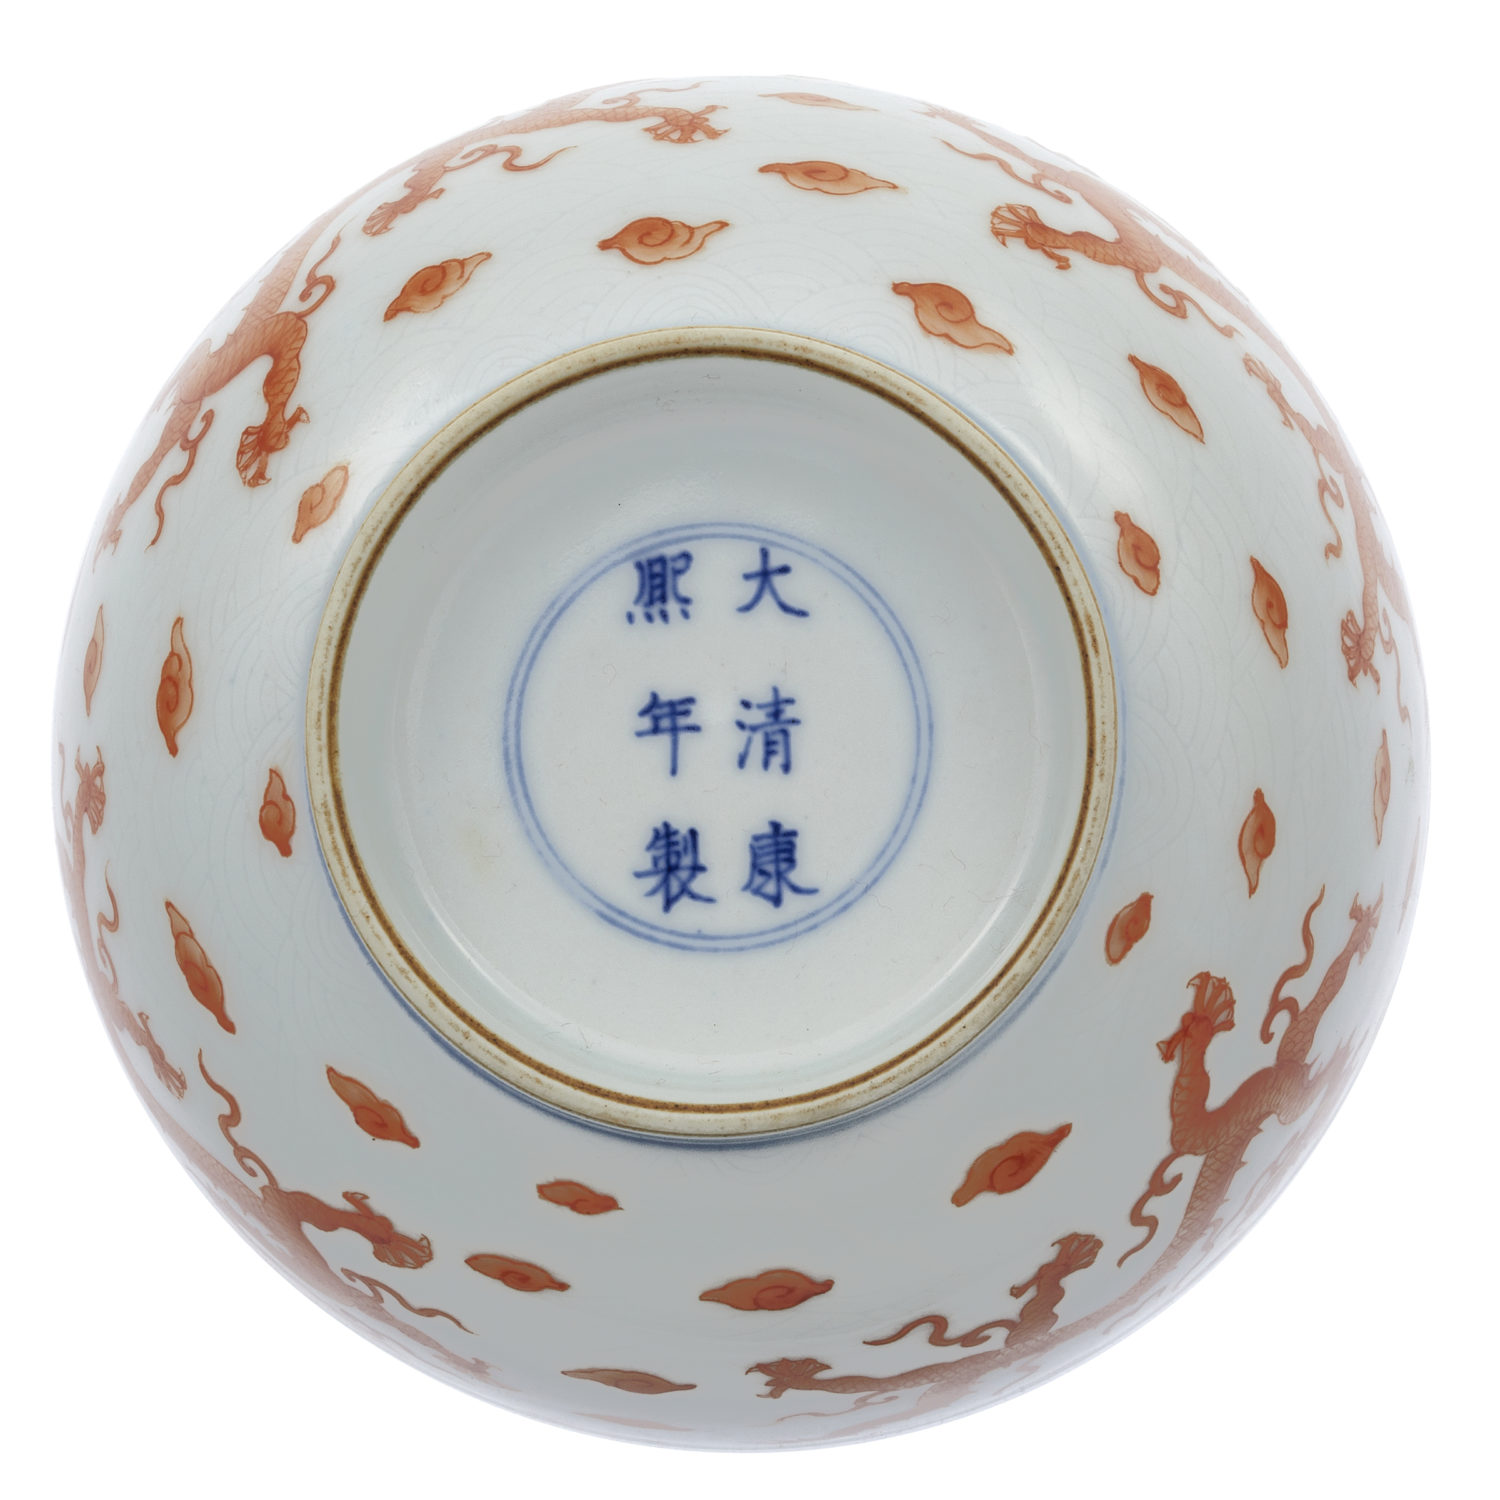 Pair of Iron-Red Painted Dragon Bowls, Kangxi Marks Period Bottom